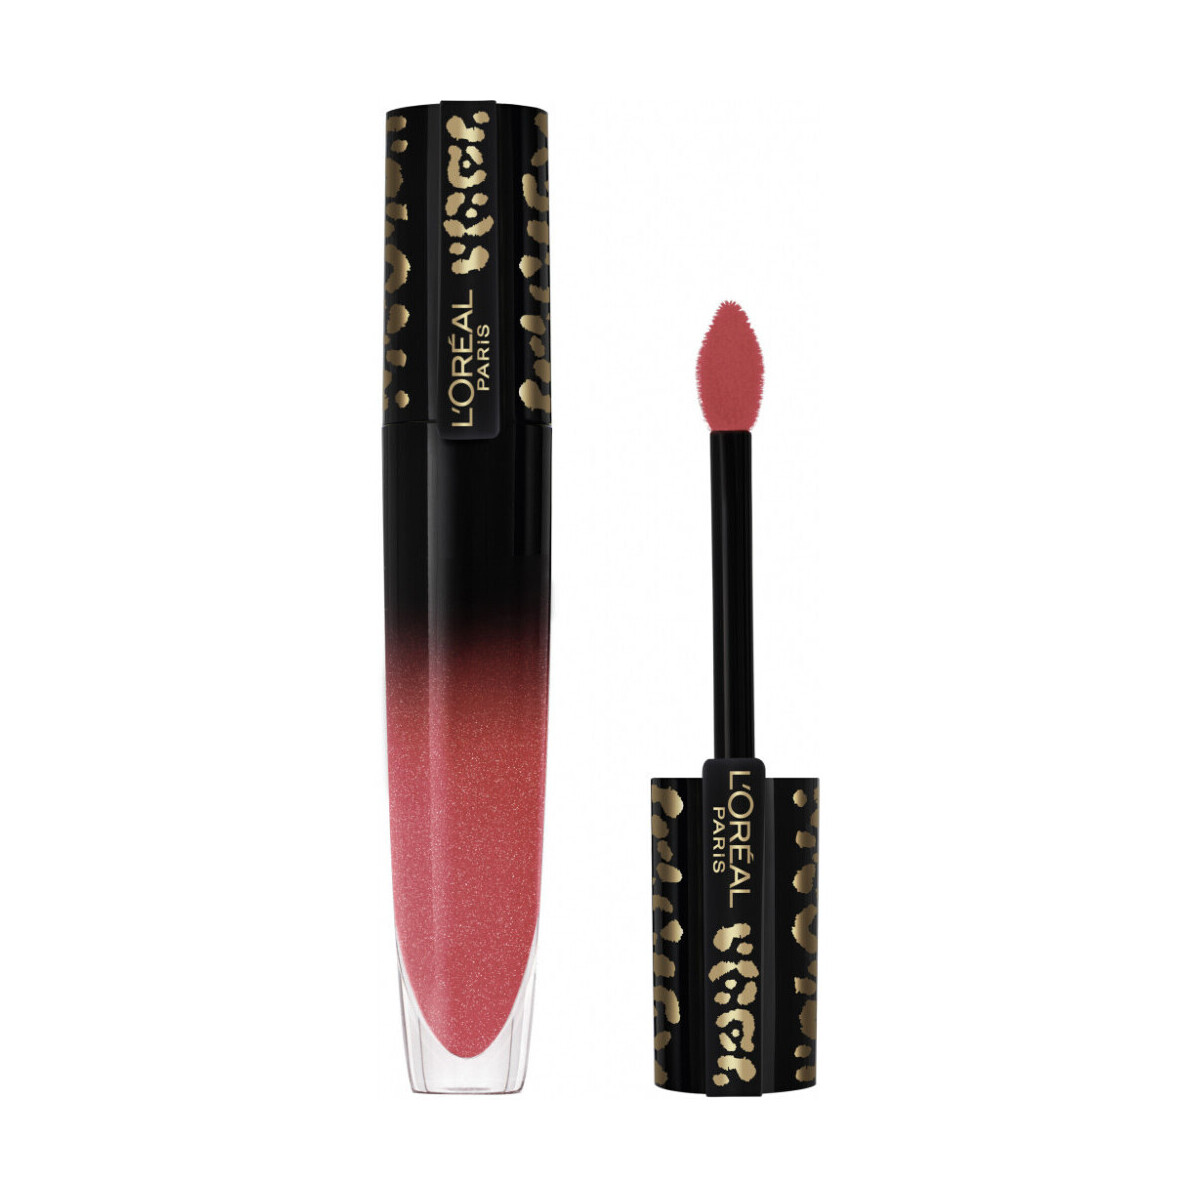 schoonheid Dames Lipstick L'oréal Signature Gelakte Vloeibare Lippenstift Rood